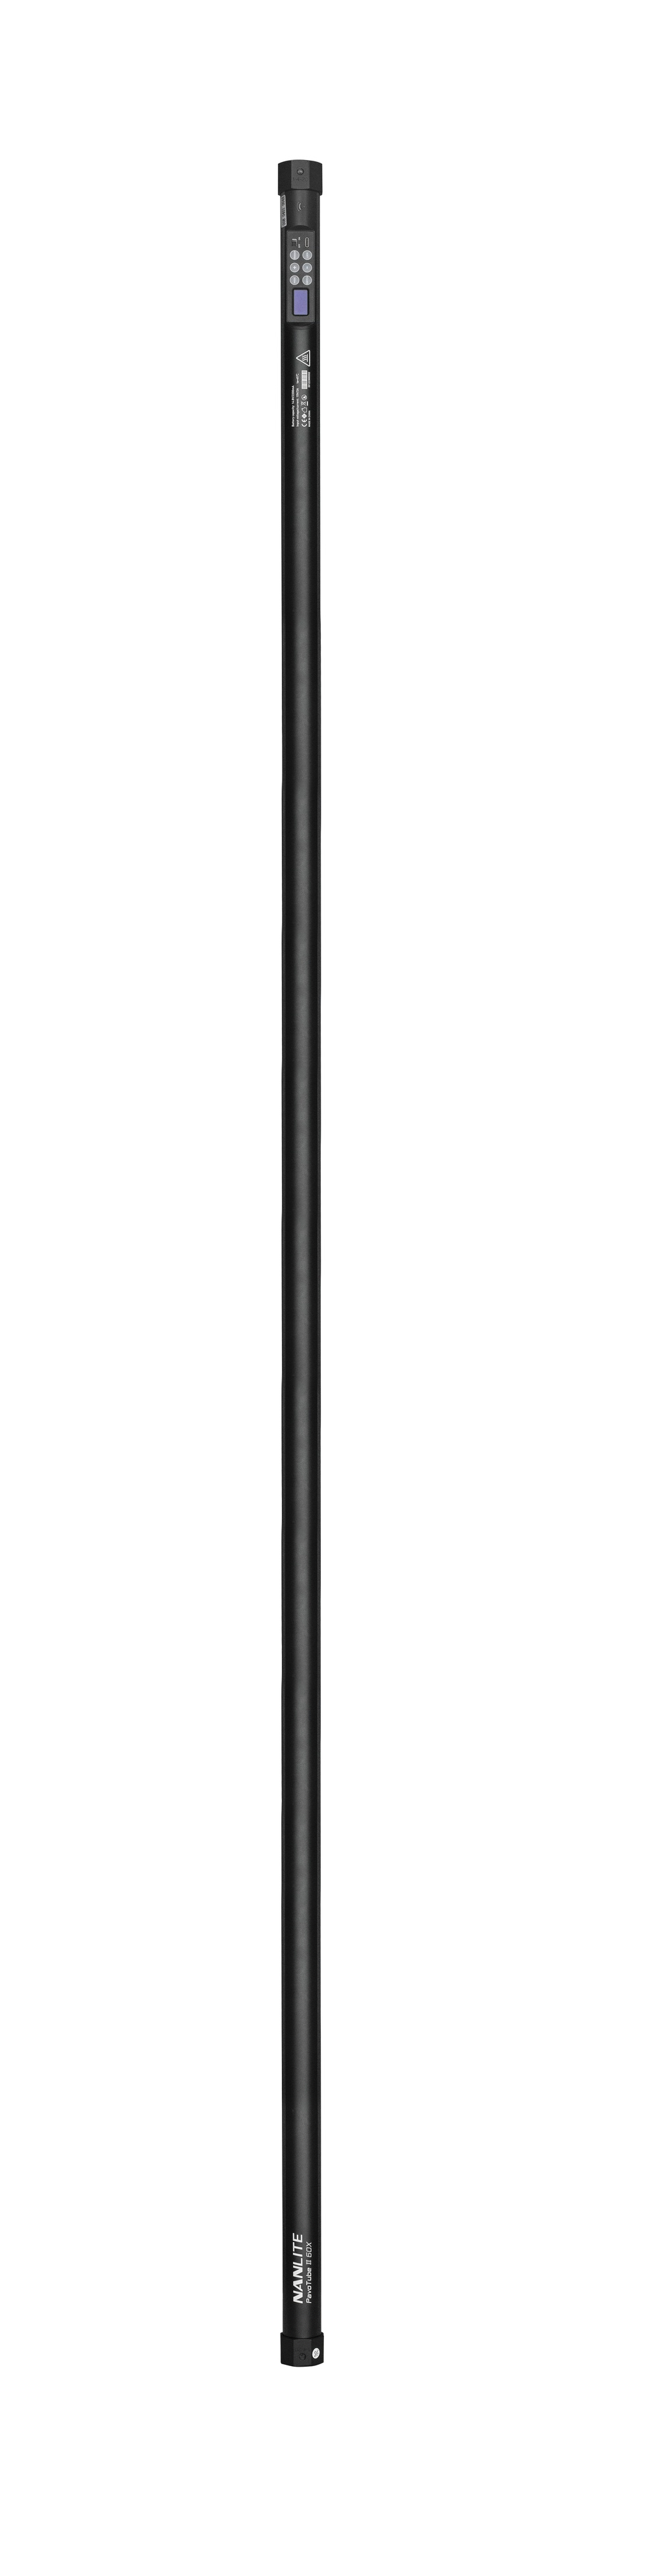 PavoTube II 60X (01).jpg